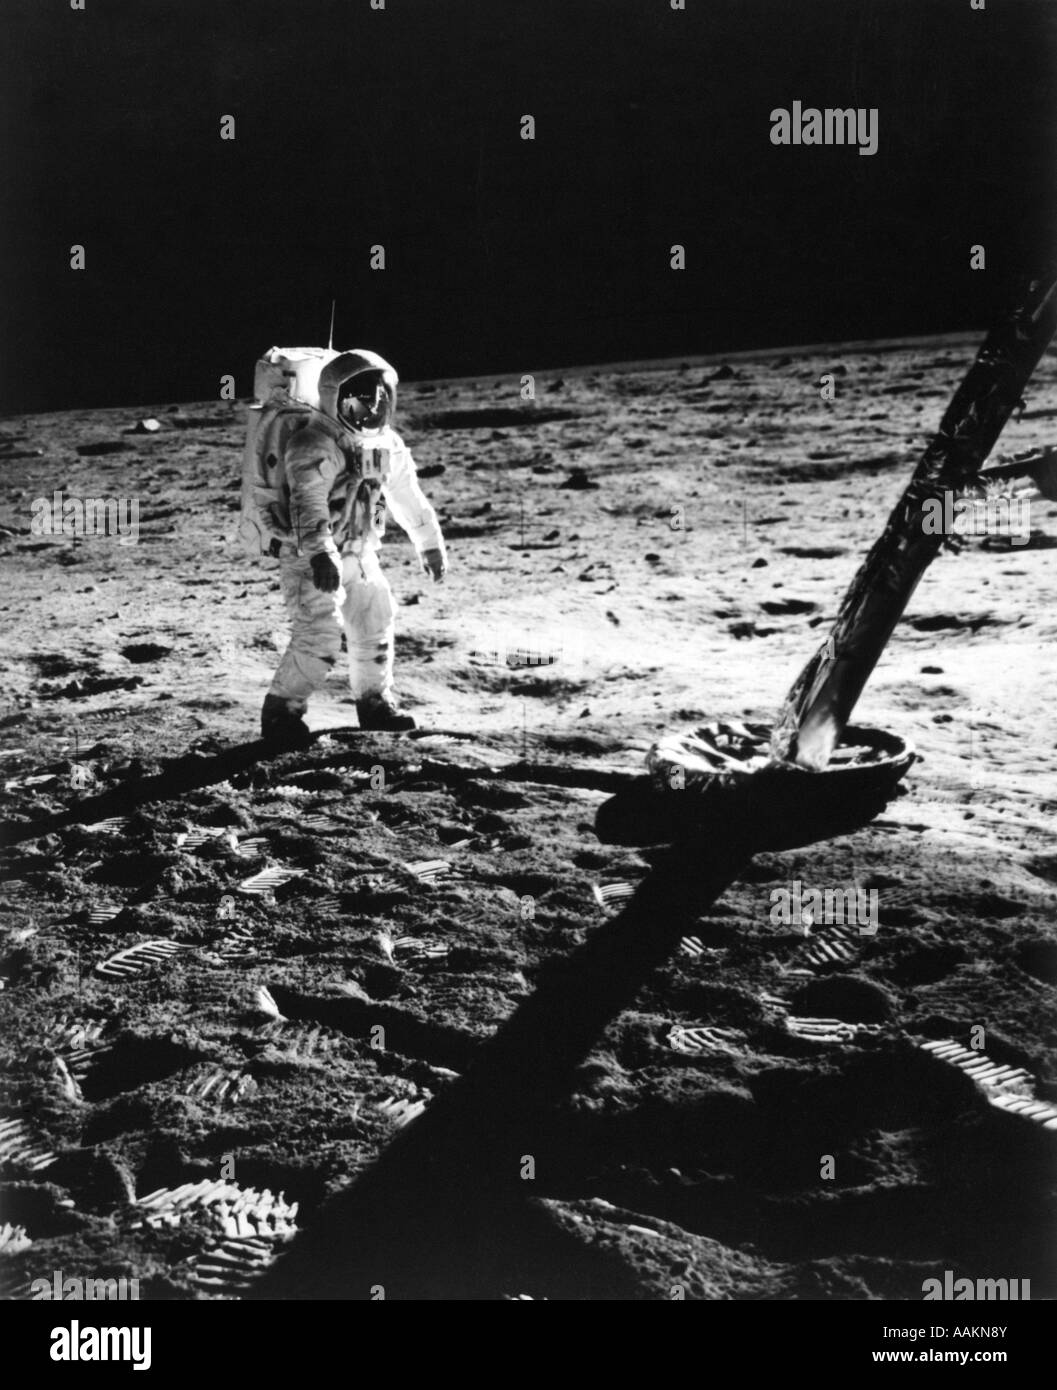 1960s ASTRONAUT BUZZ ALDRIN IN SPACE SUIT WALKING ON THE MOON NEAR THE APOLLO 11 LUNAR MODULE Stock Photo